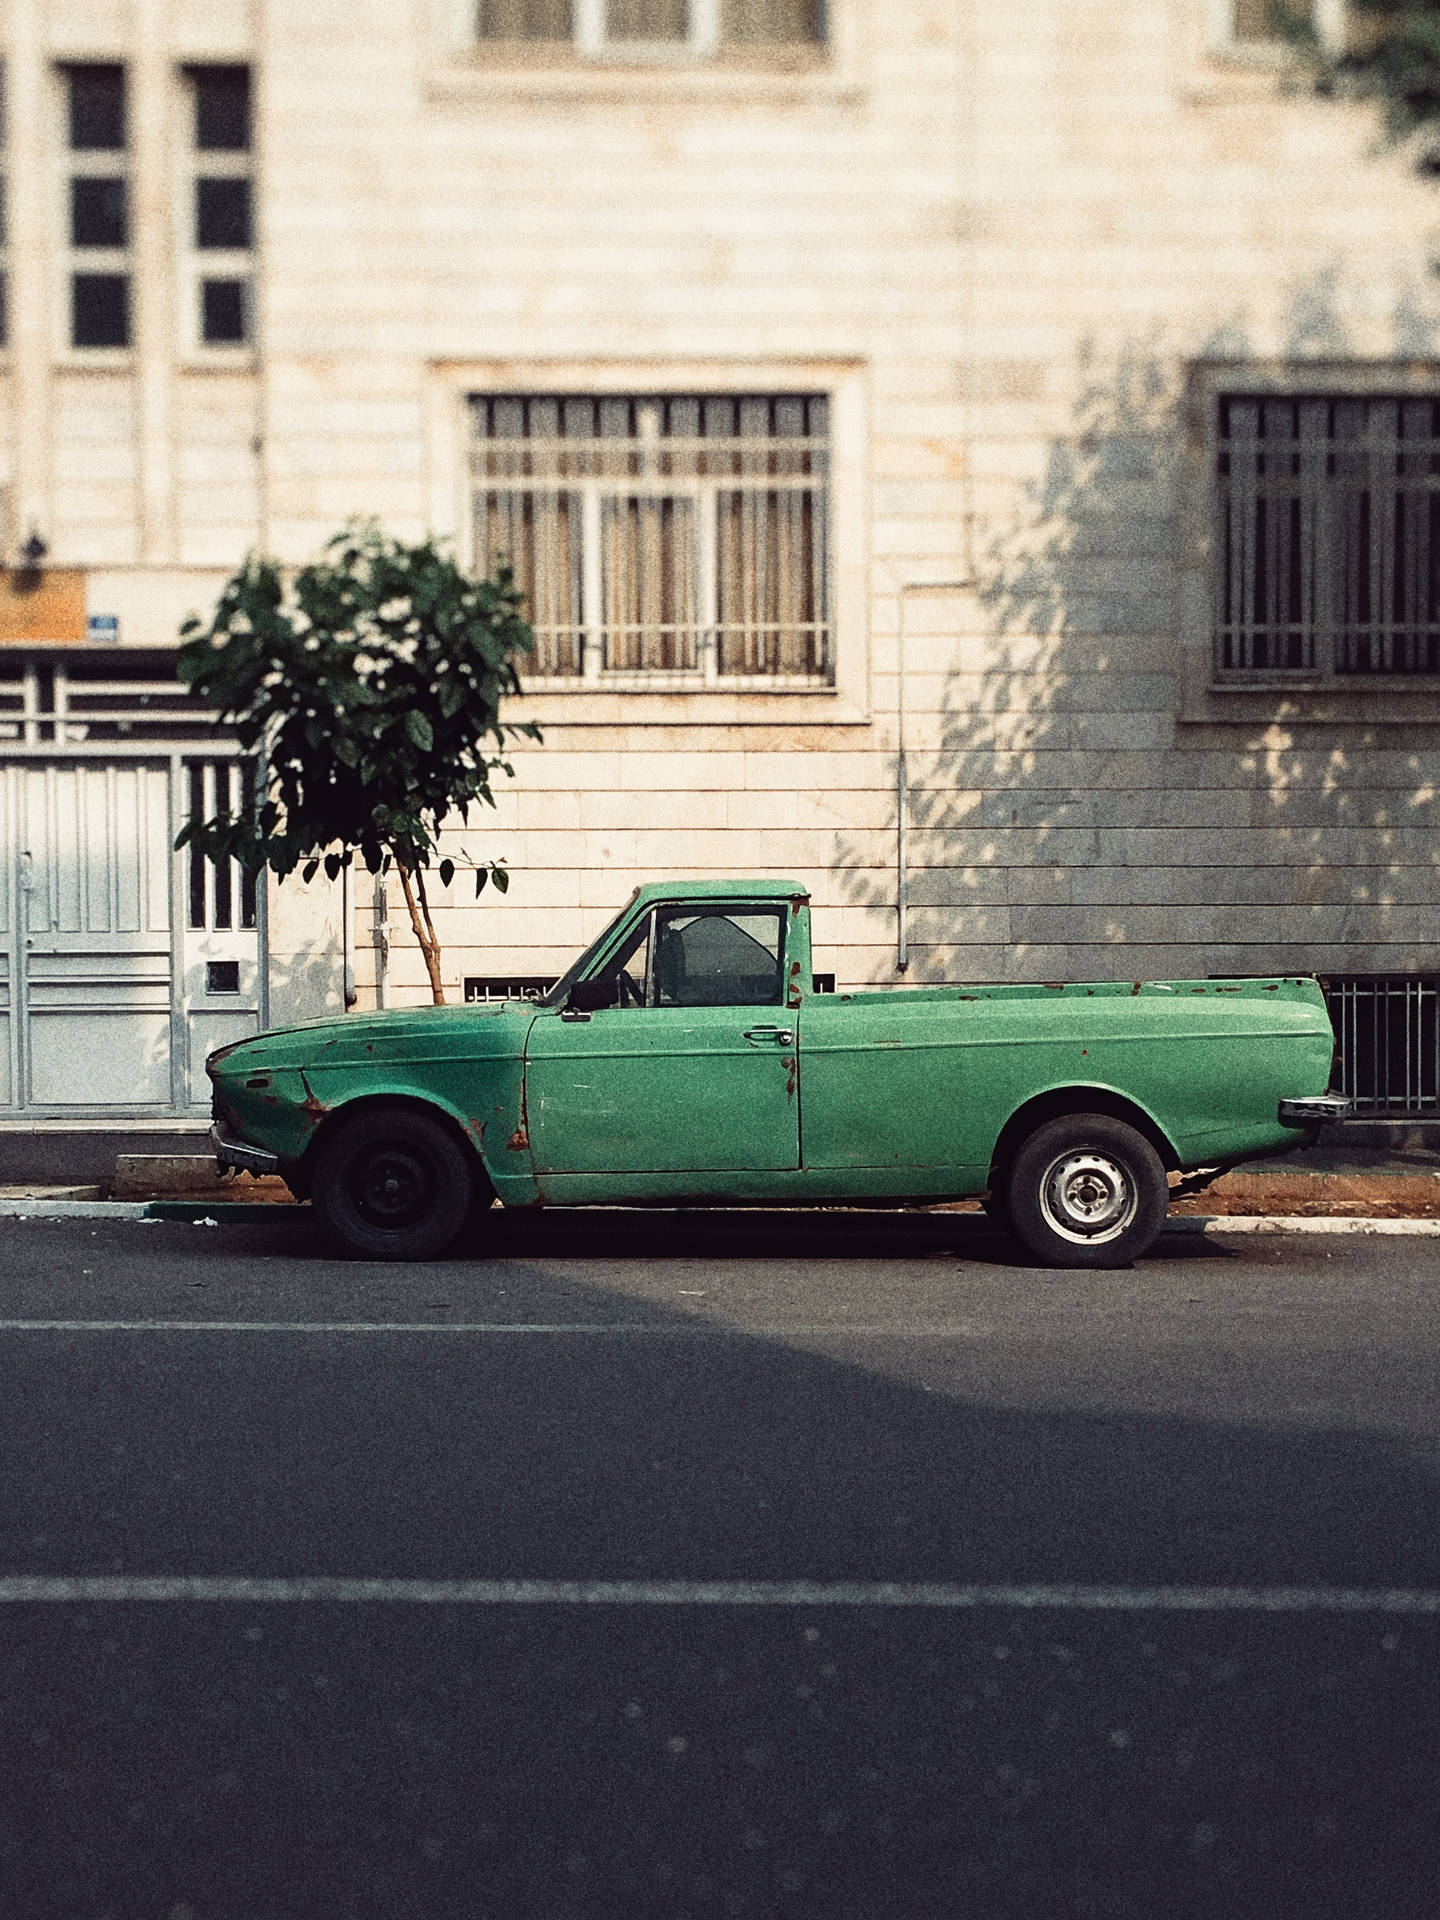 Green Car In The Street Wallpaper